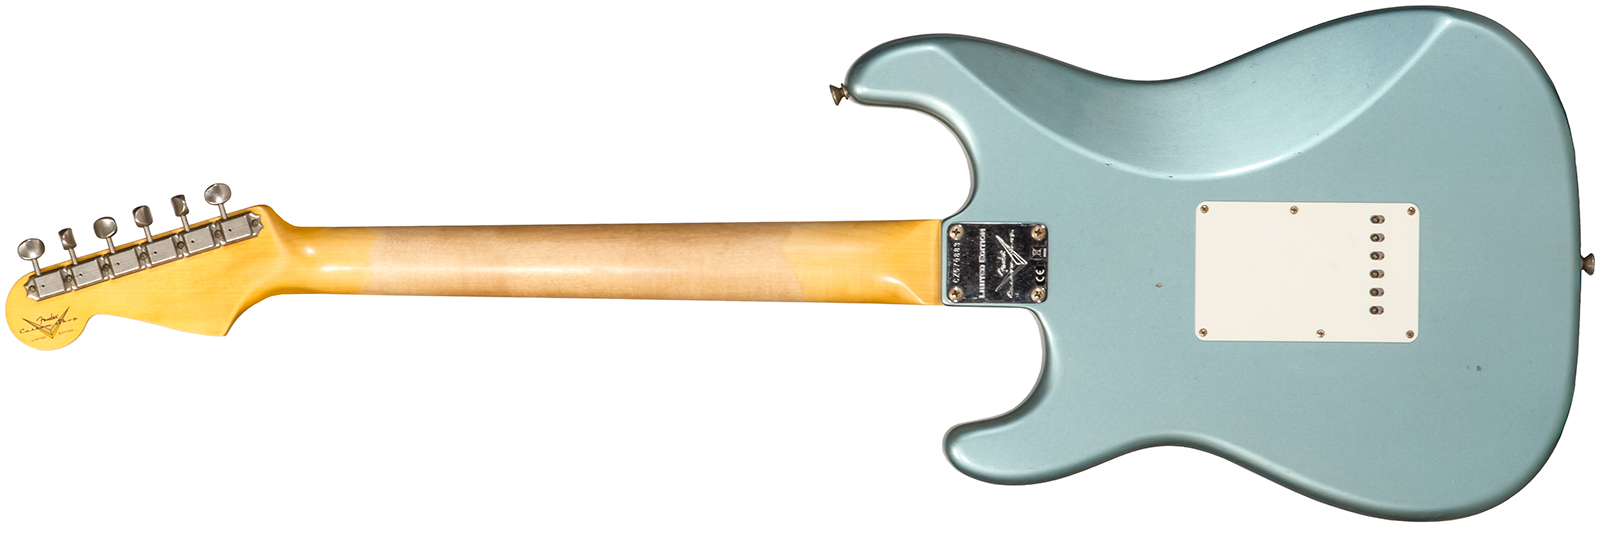 Fender Custom Shop Strat 1959 3s Trem Rw #cz570883 - Journeyman Relic Teal Green Metallic - Guitare Électrique Forme Str - Variation 1